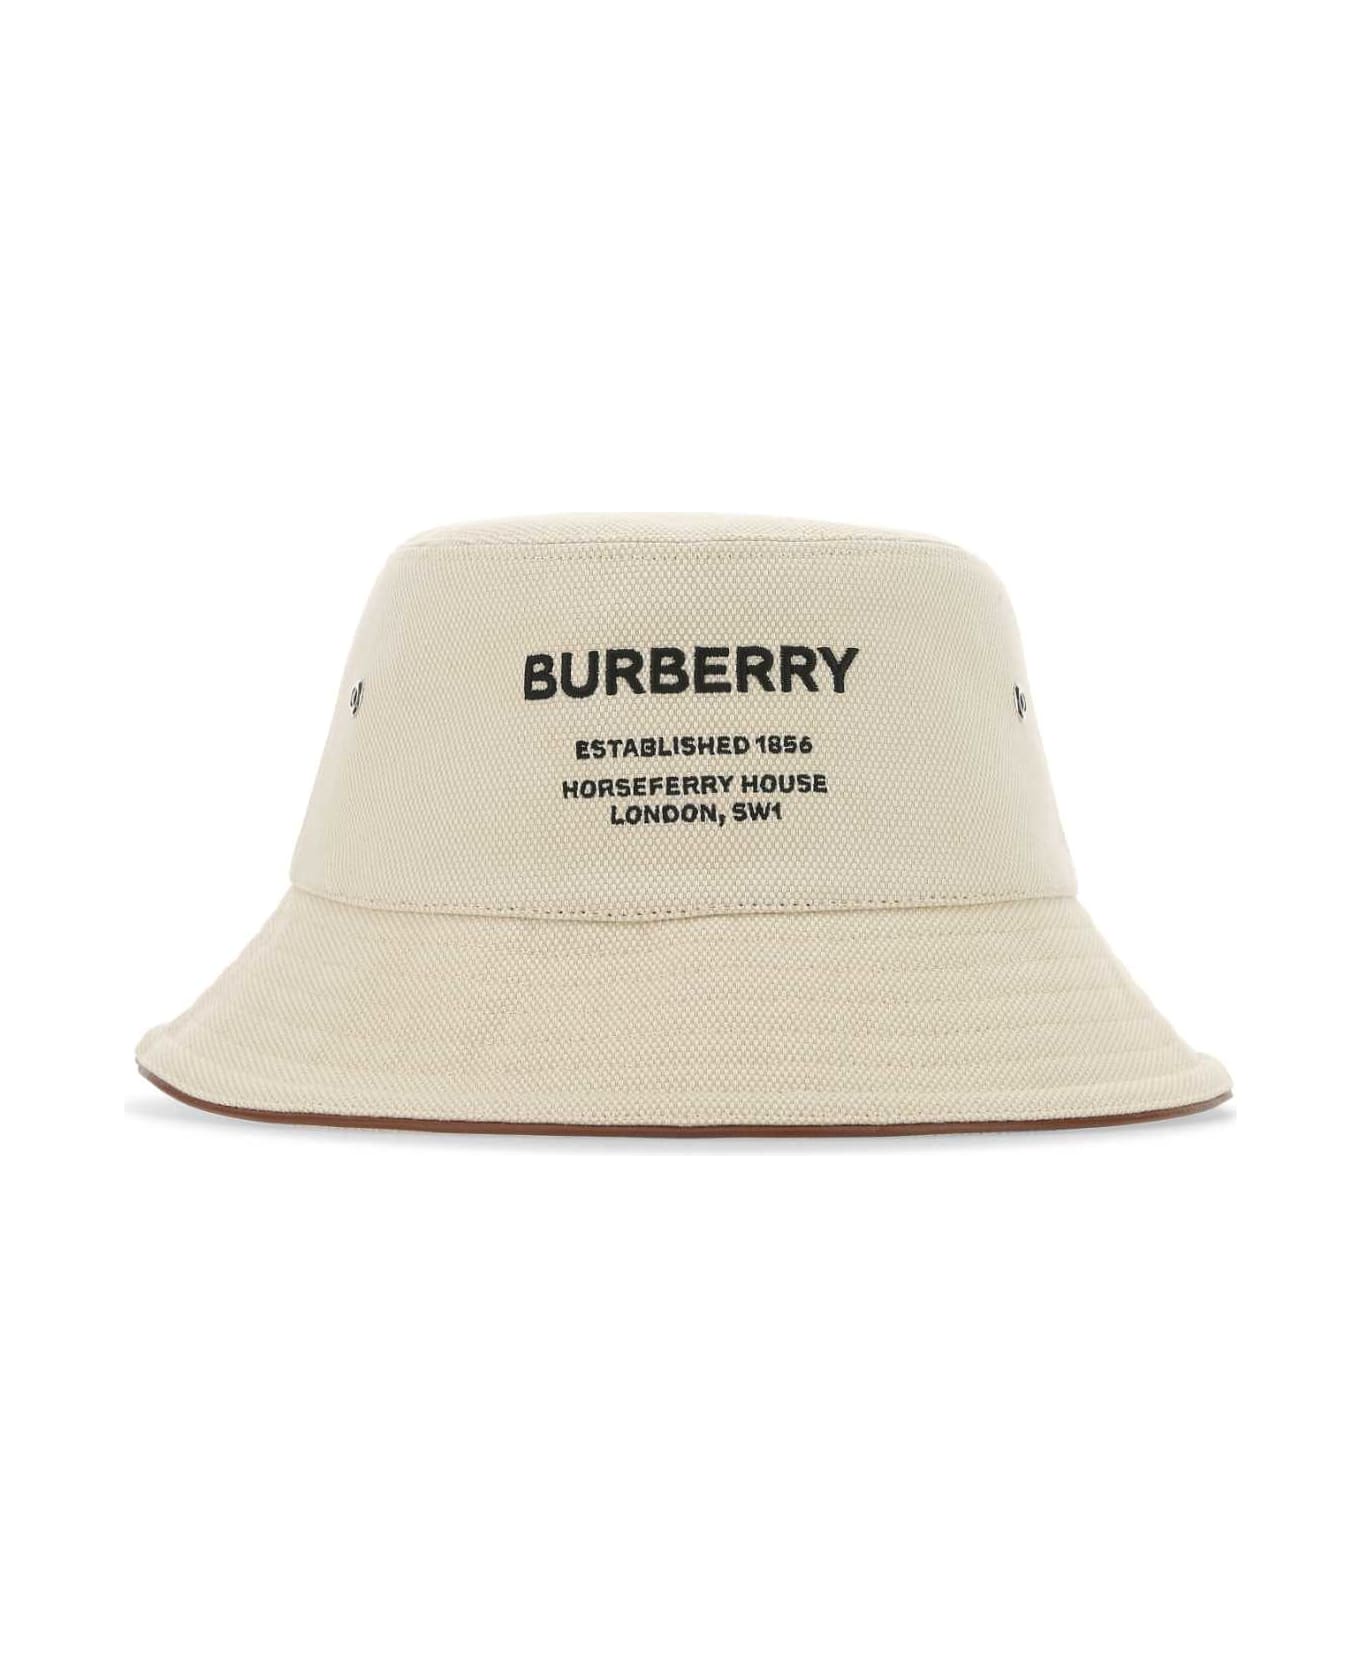 Burberry Sand Cotton Hat - A1395